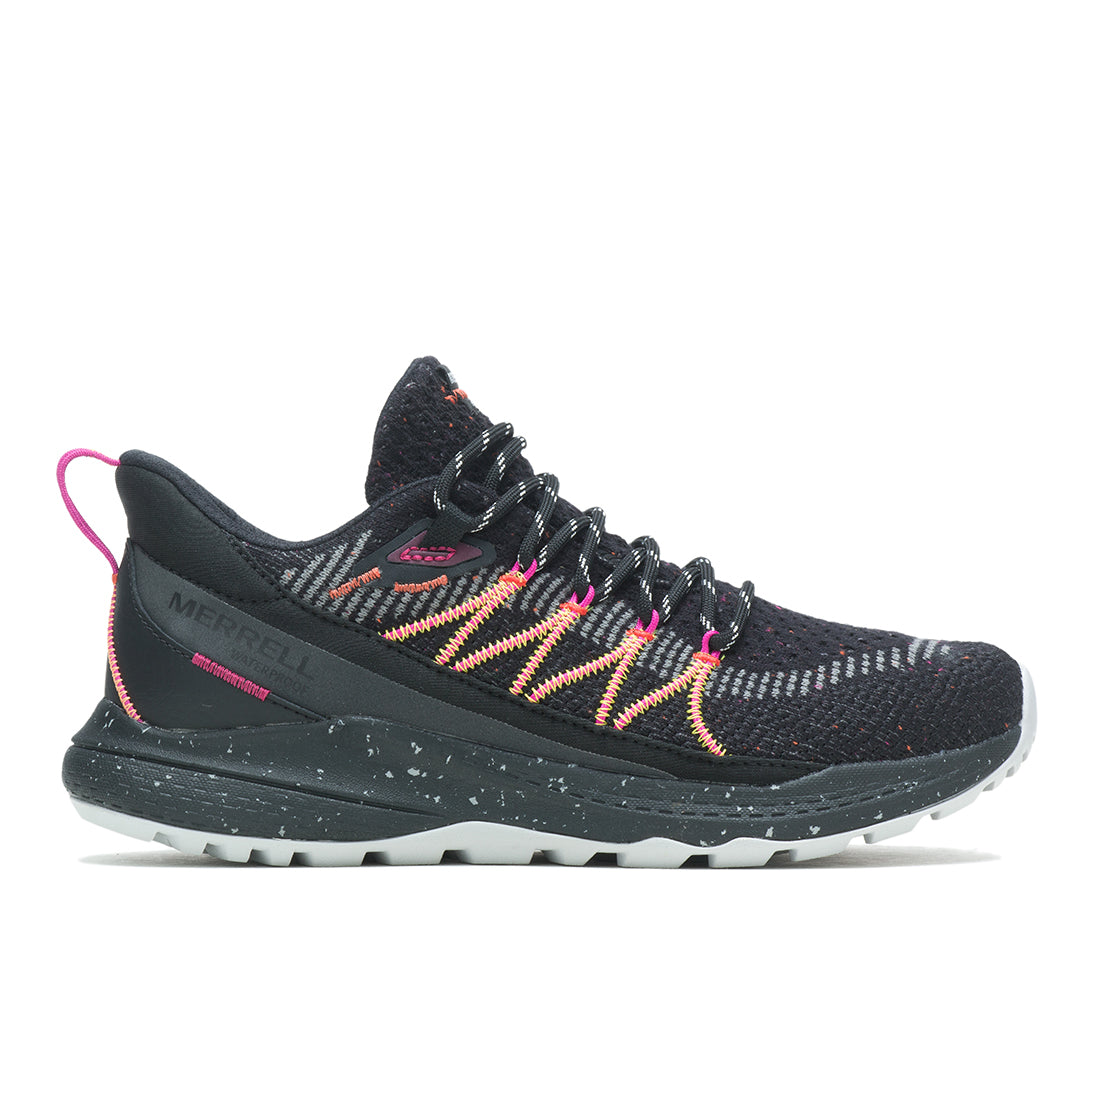 Bravada 2 Waterproof – Black/Fuschia Womens Hiking Shoes